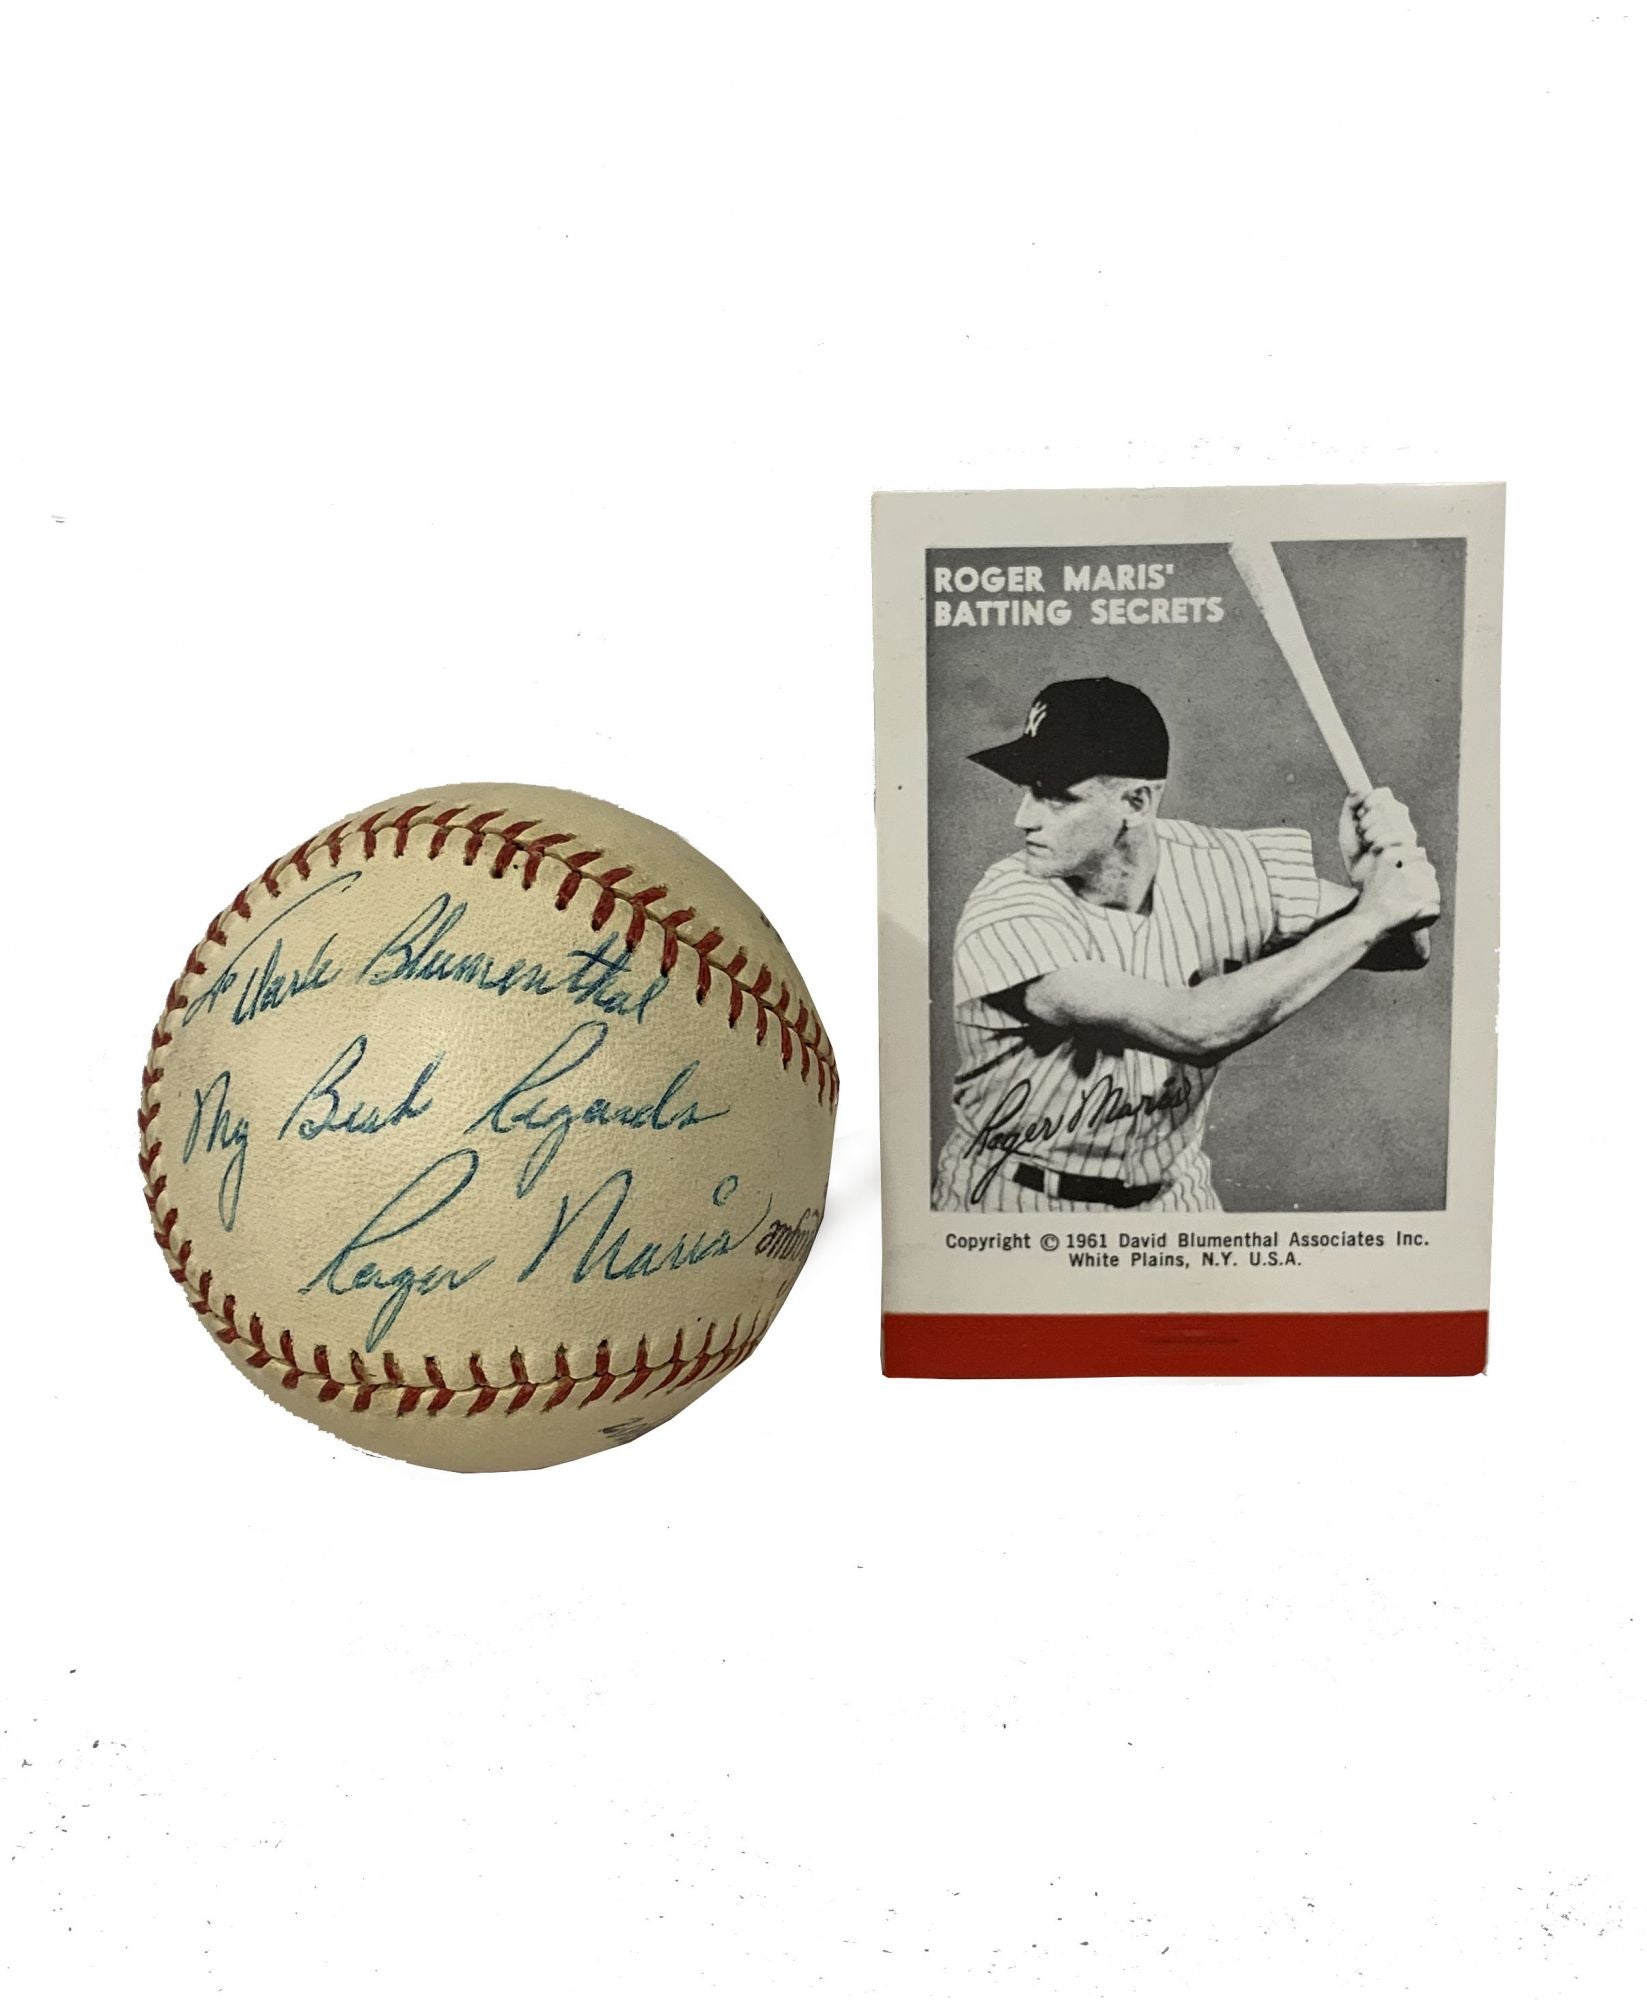 Roger Maris Baseball Inscribed to the New York Yankees' 1961 Team  Photographer with Roger Maris' Batting Secrets by Roger Maris, David  Blumenthal on B